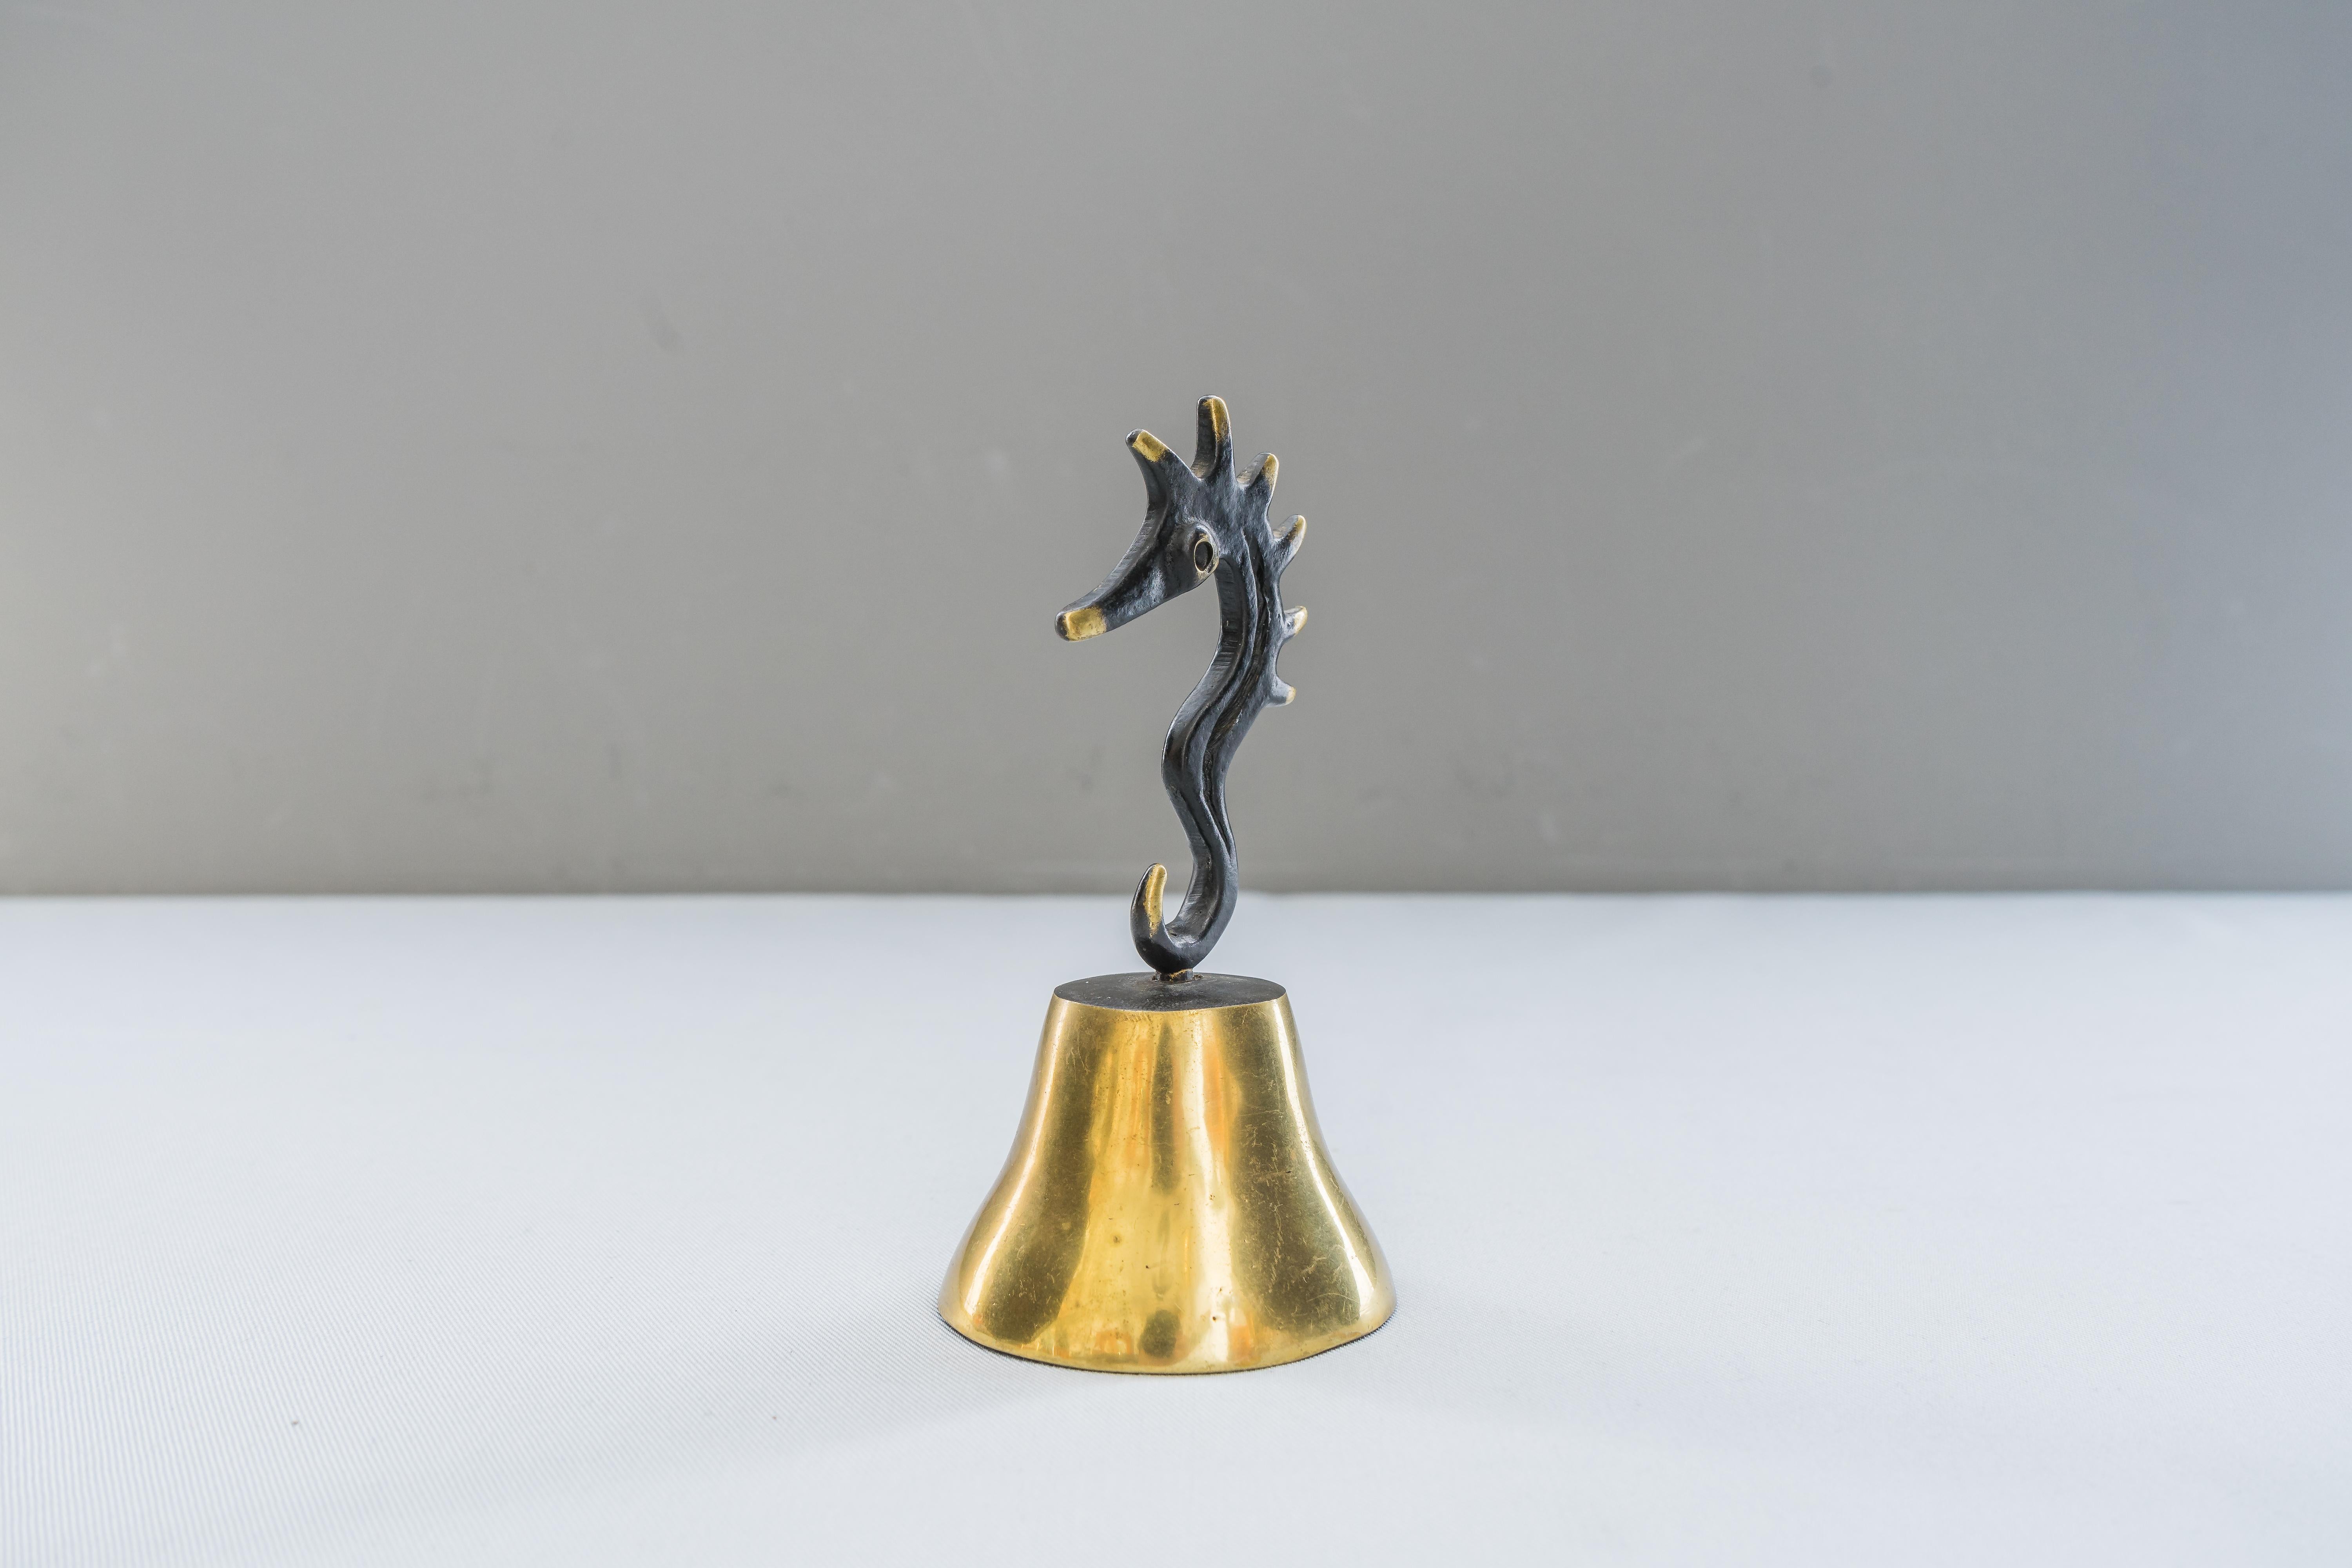 Seahorse bell by Walter Bosse, circa 1950s
Original condition.
  